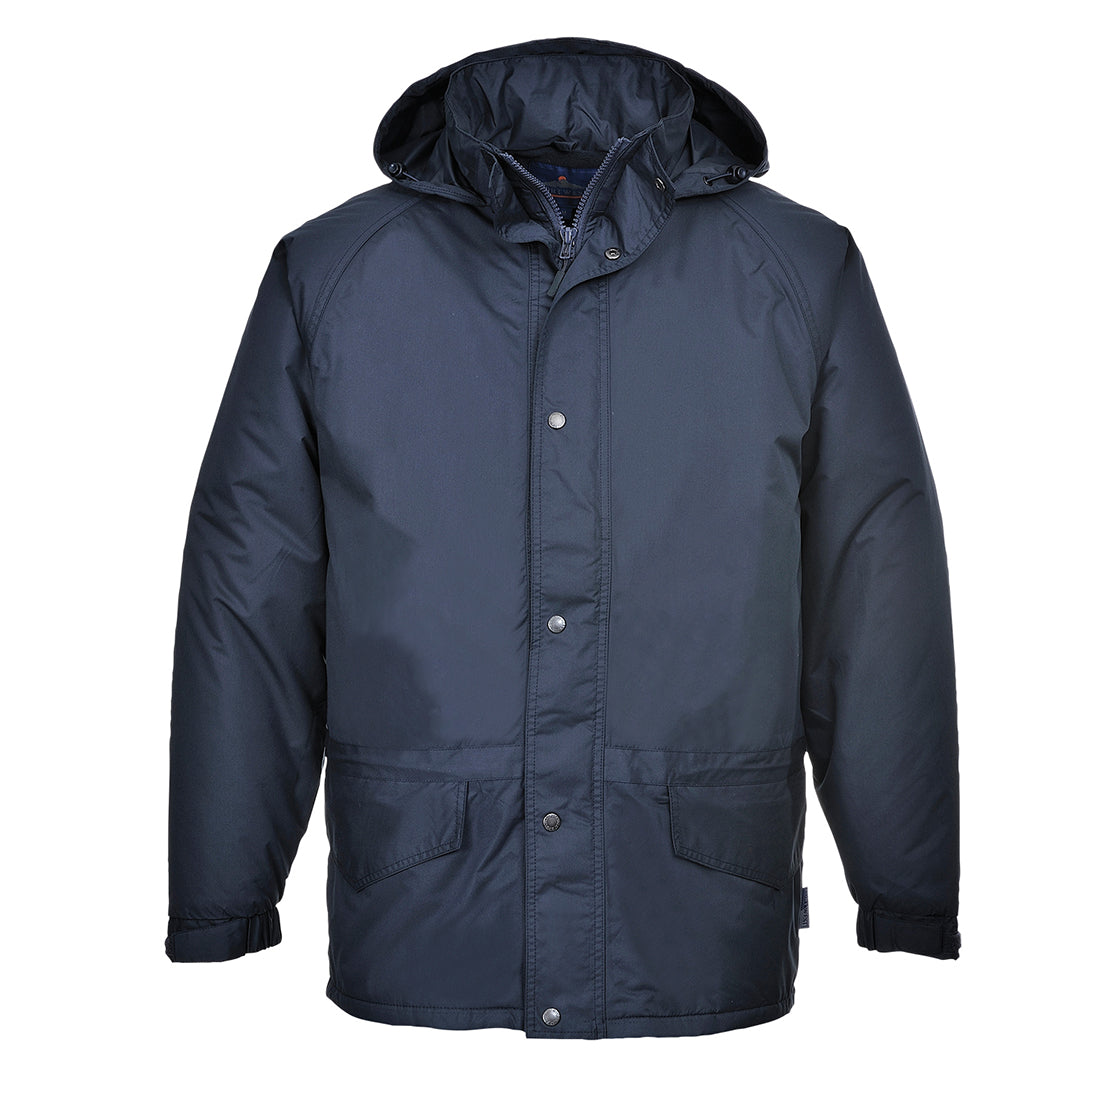 Portwest Arbroath Breathable Fleece Lined Jacket